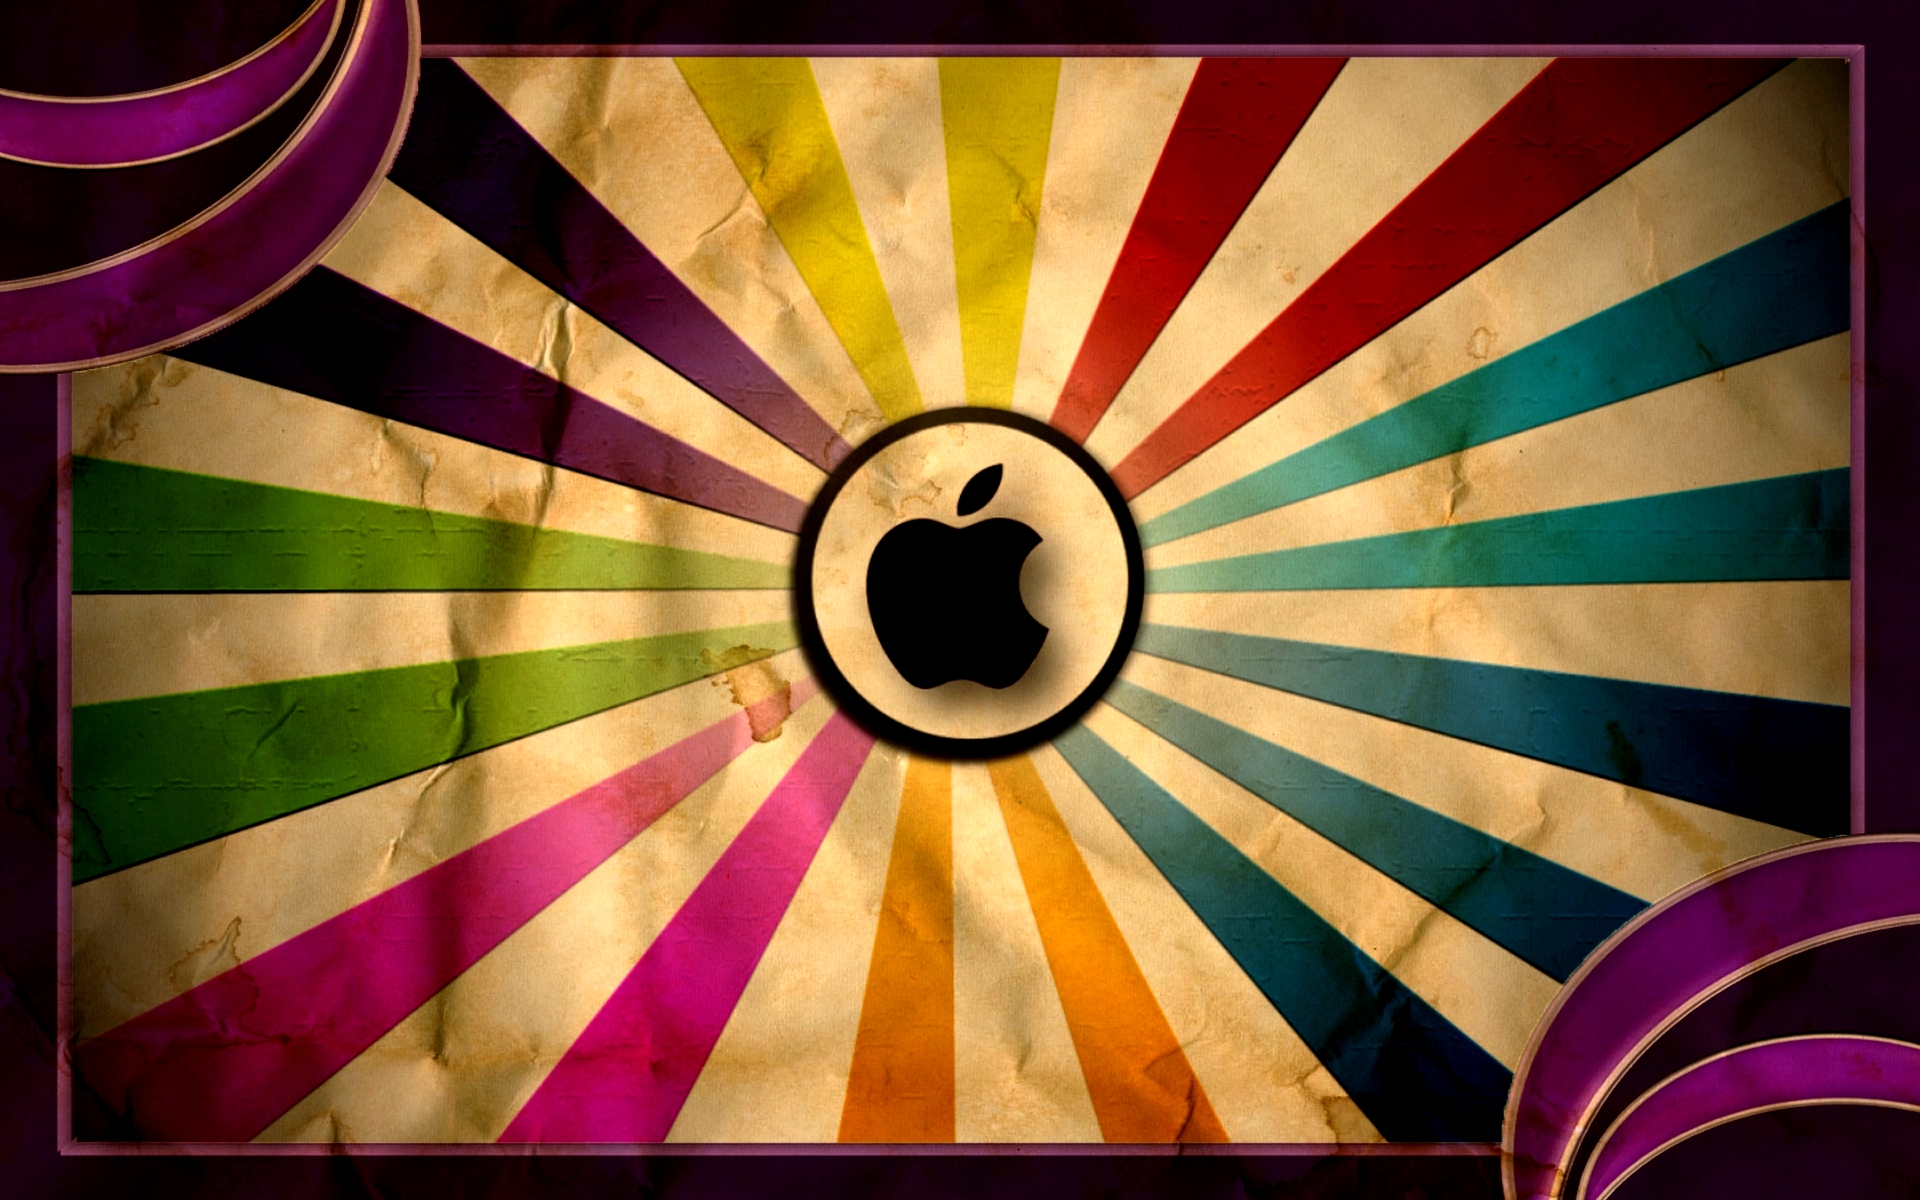 Technology Apple HD Wallpaper | Background Image